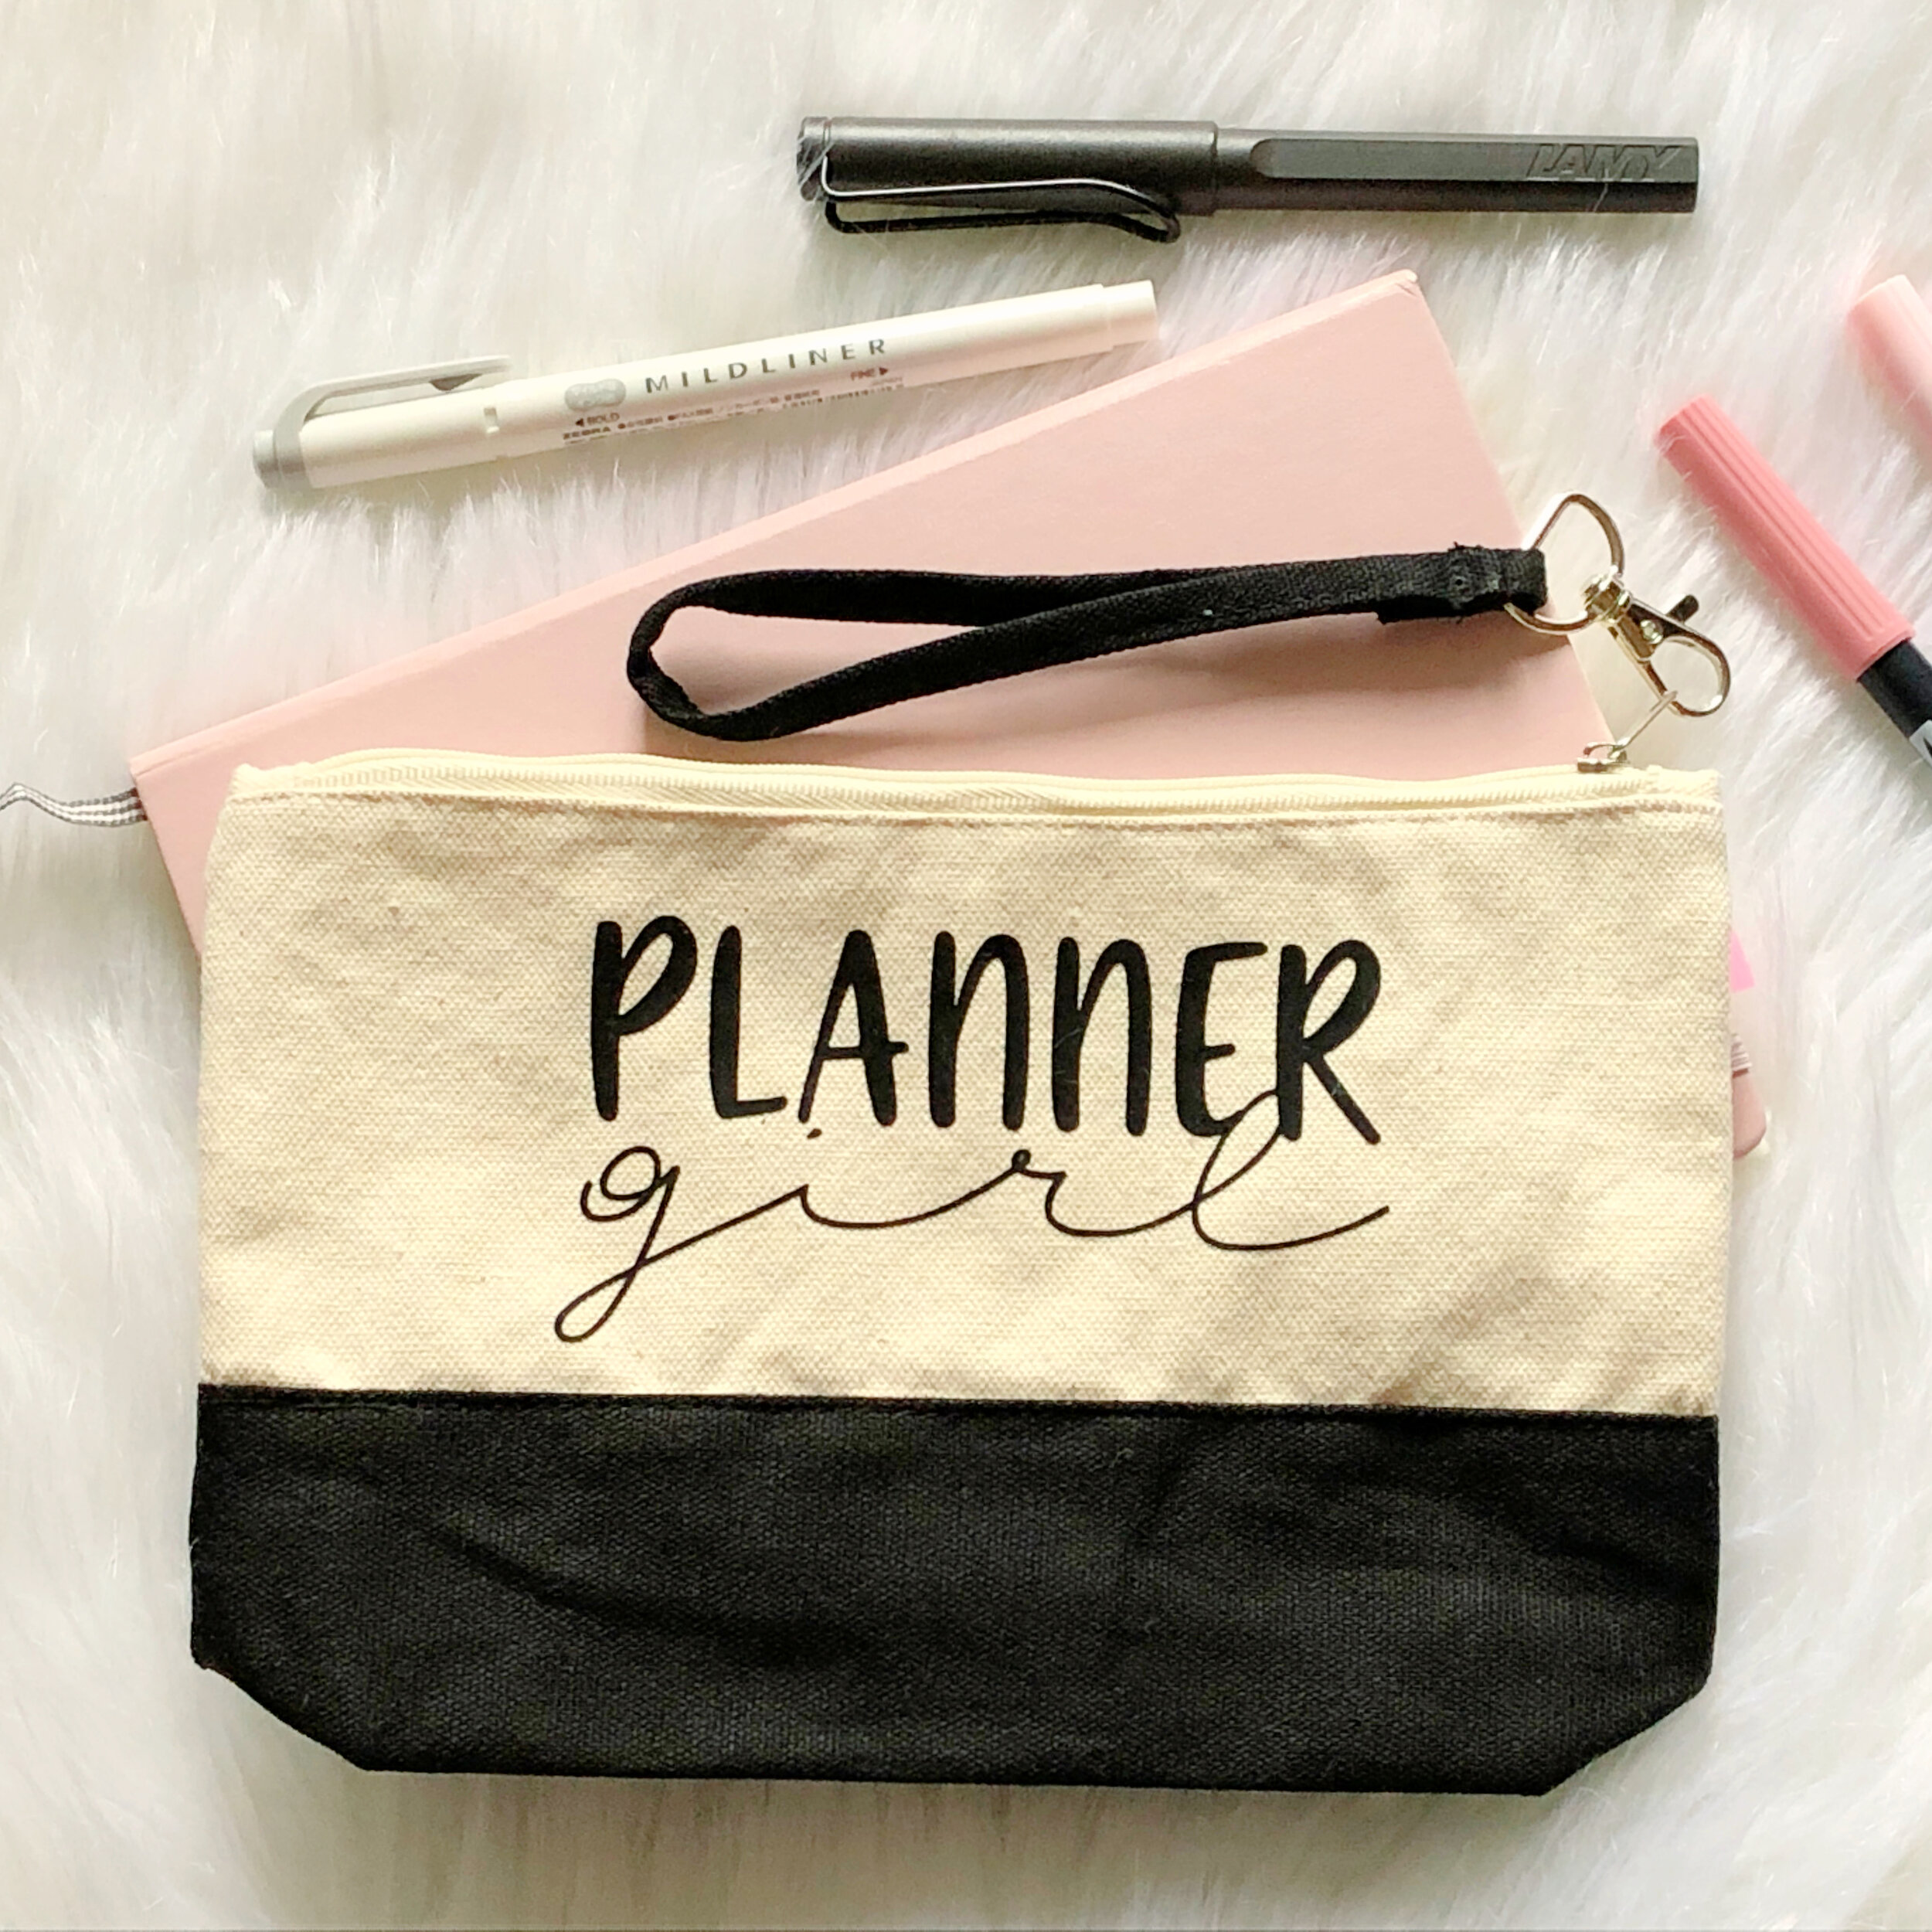 Planner Girl Pouch - large.jpg